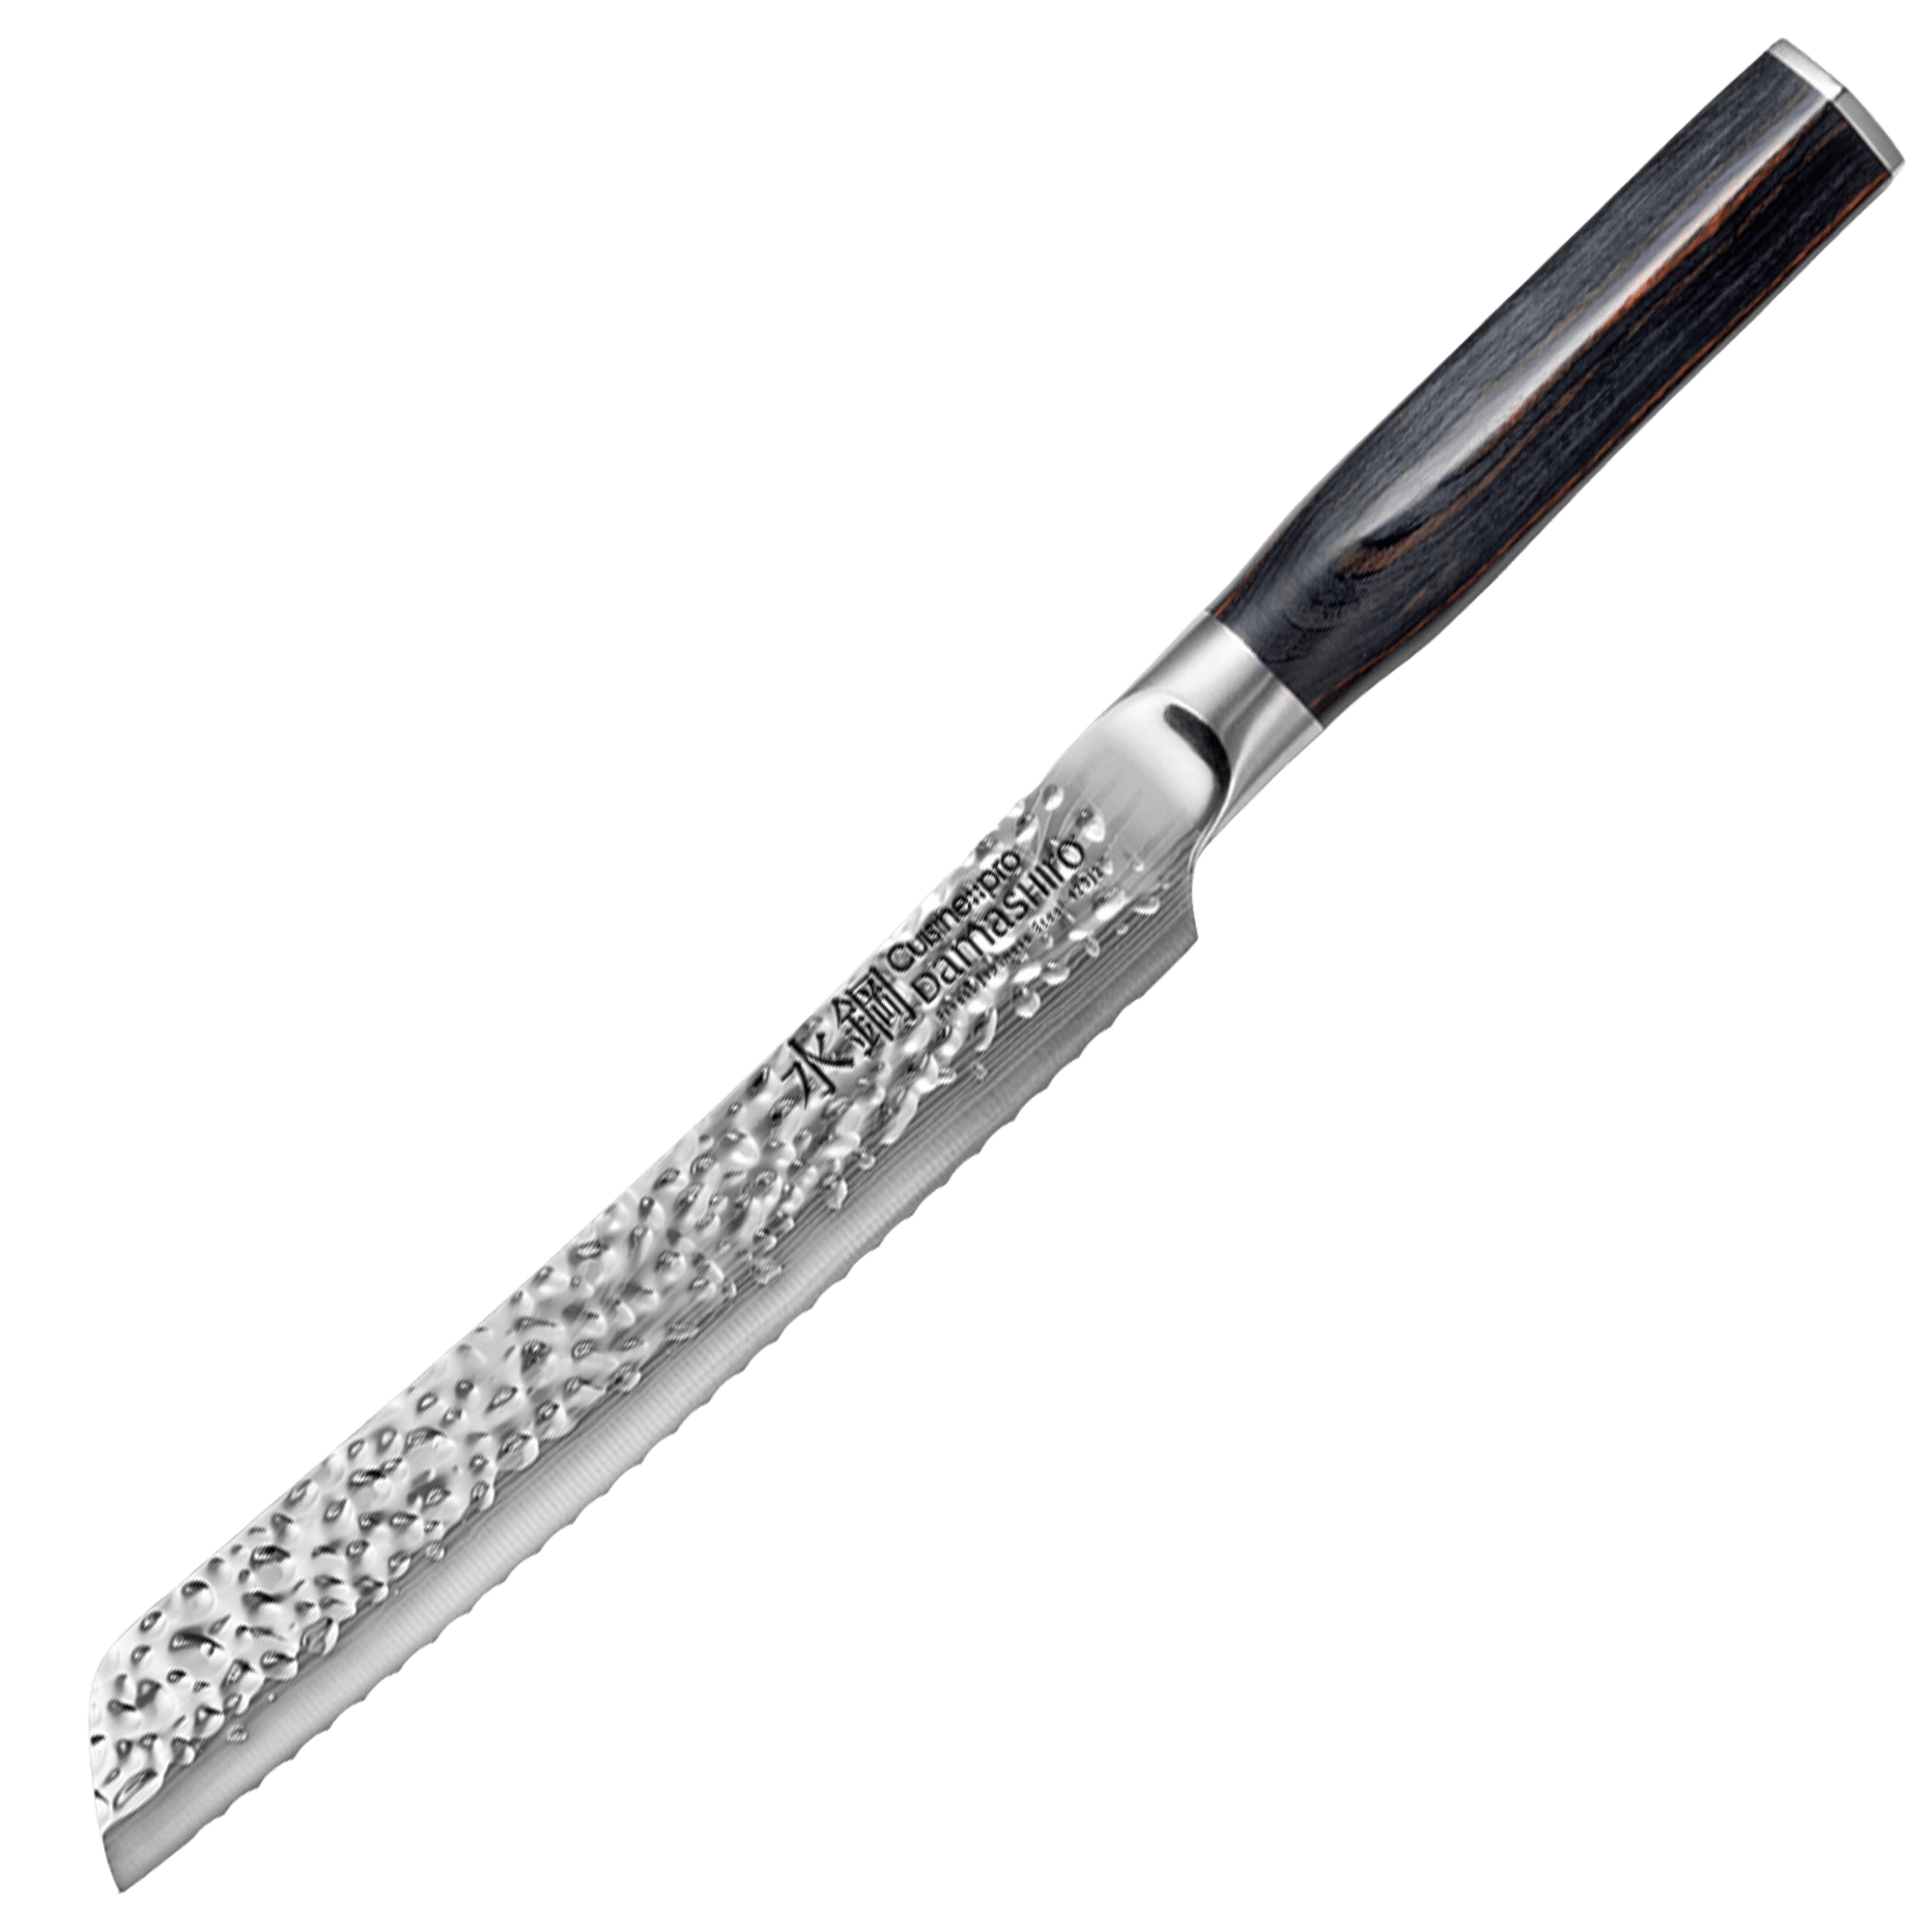 Cuisine::pro® Damashiro® EMPEROR Bread Knife 20cm 8"-1034422